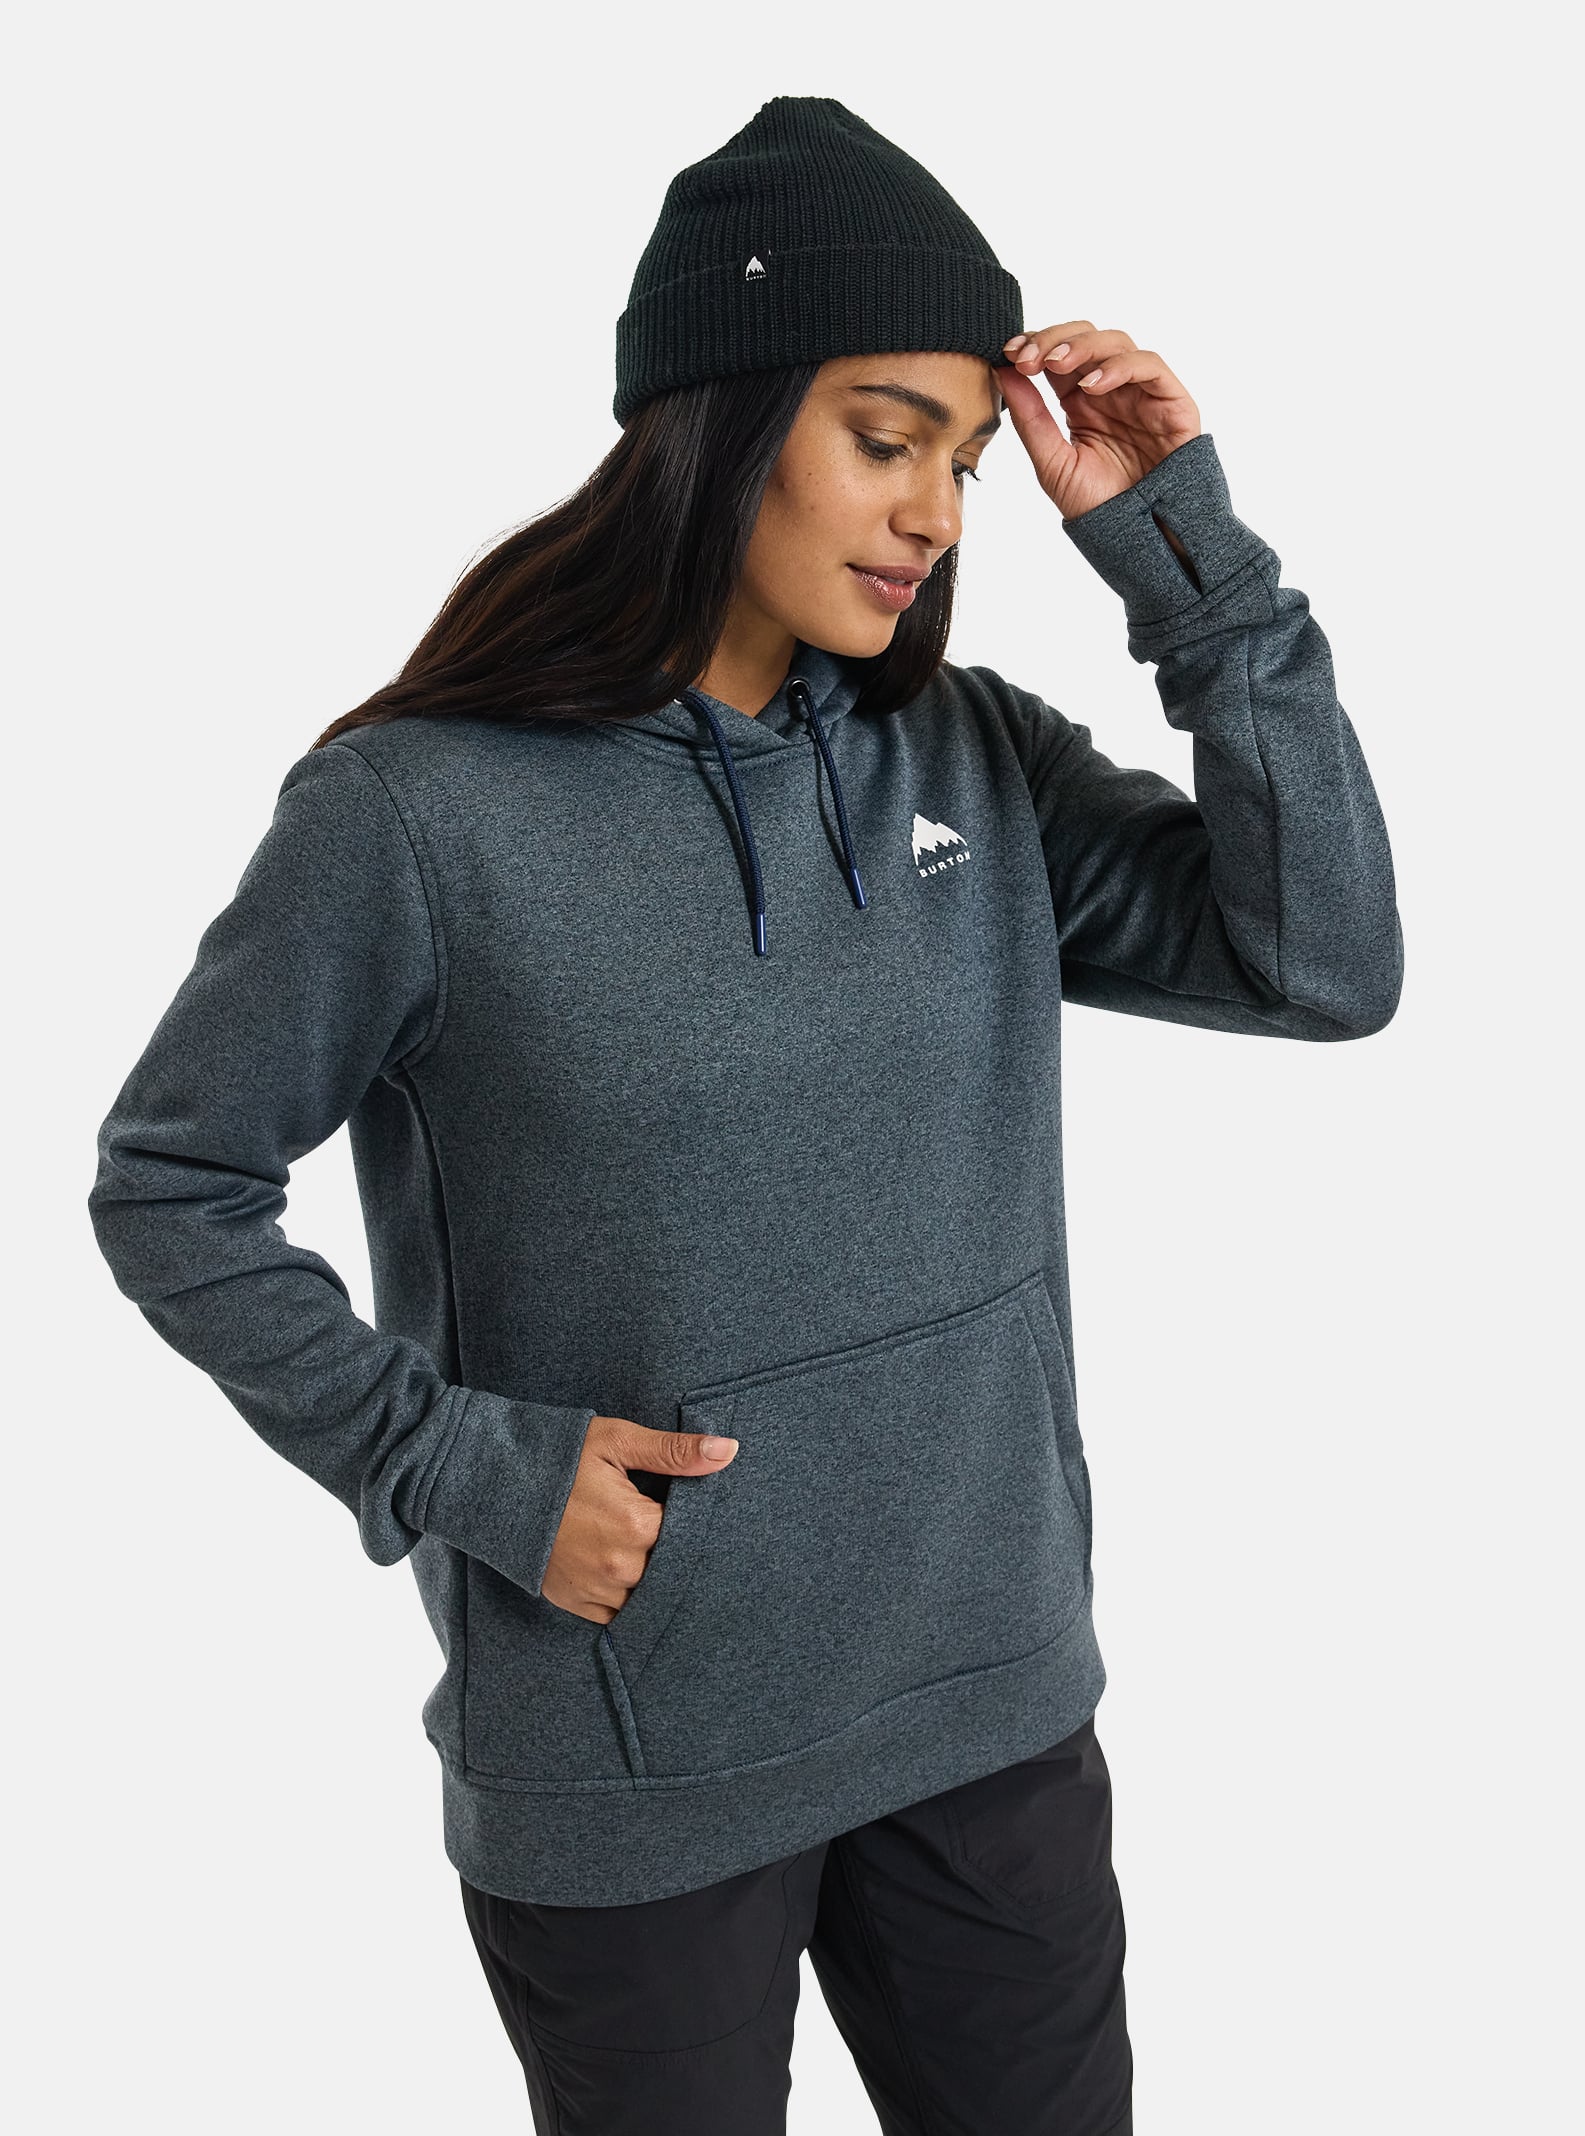 Women's Hoodies & Sweatshirts | Burton Snowboards US